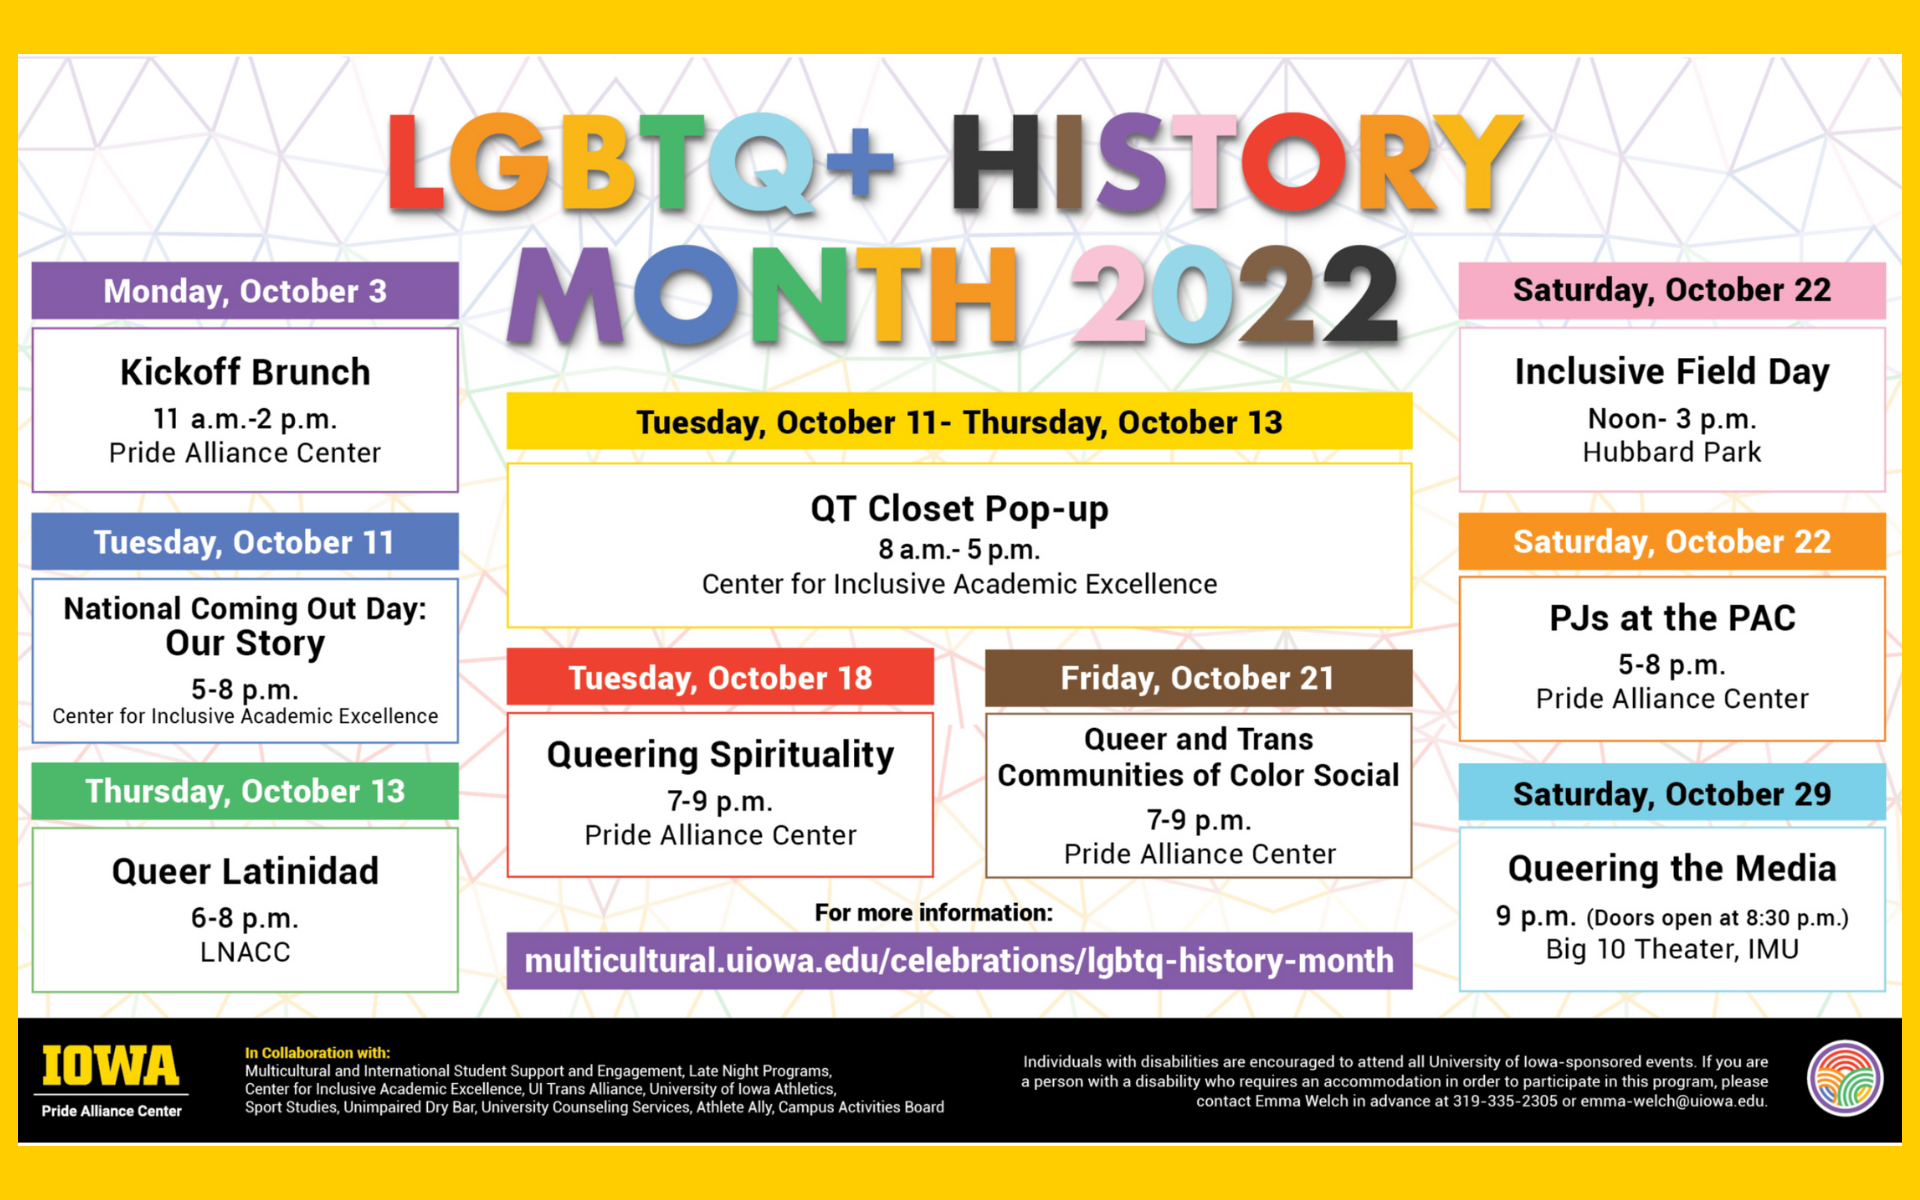 LGBTQ history month events